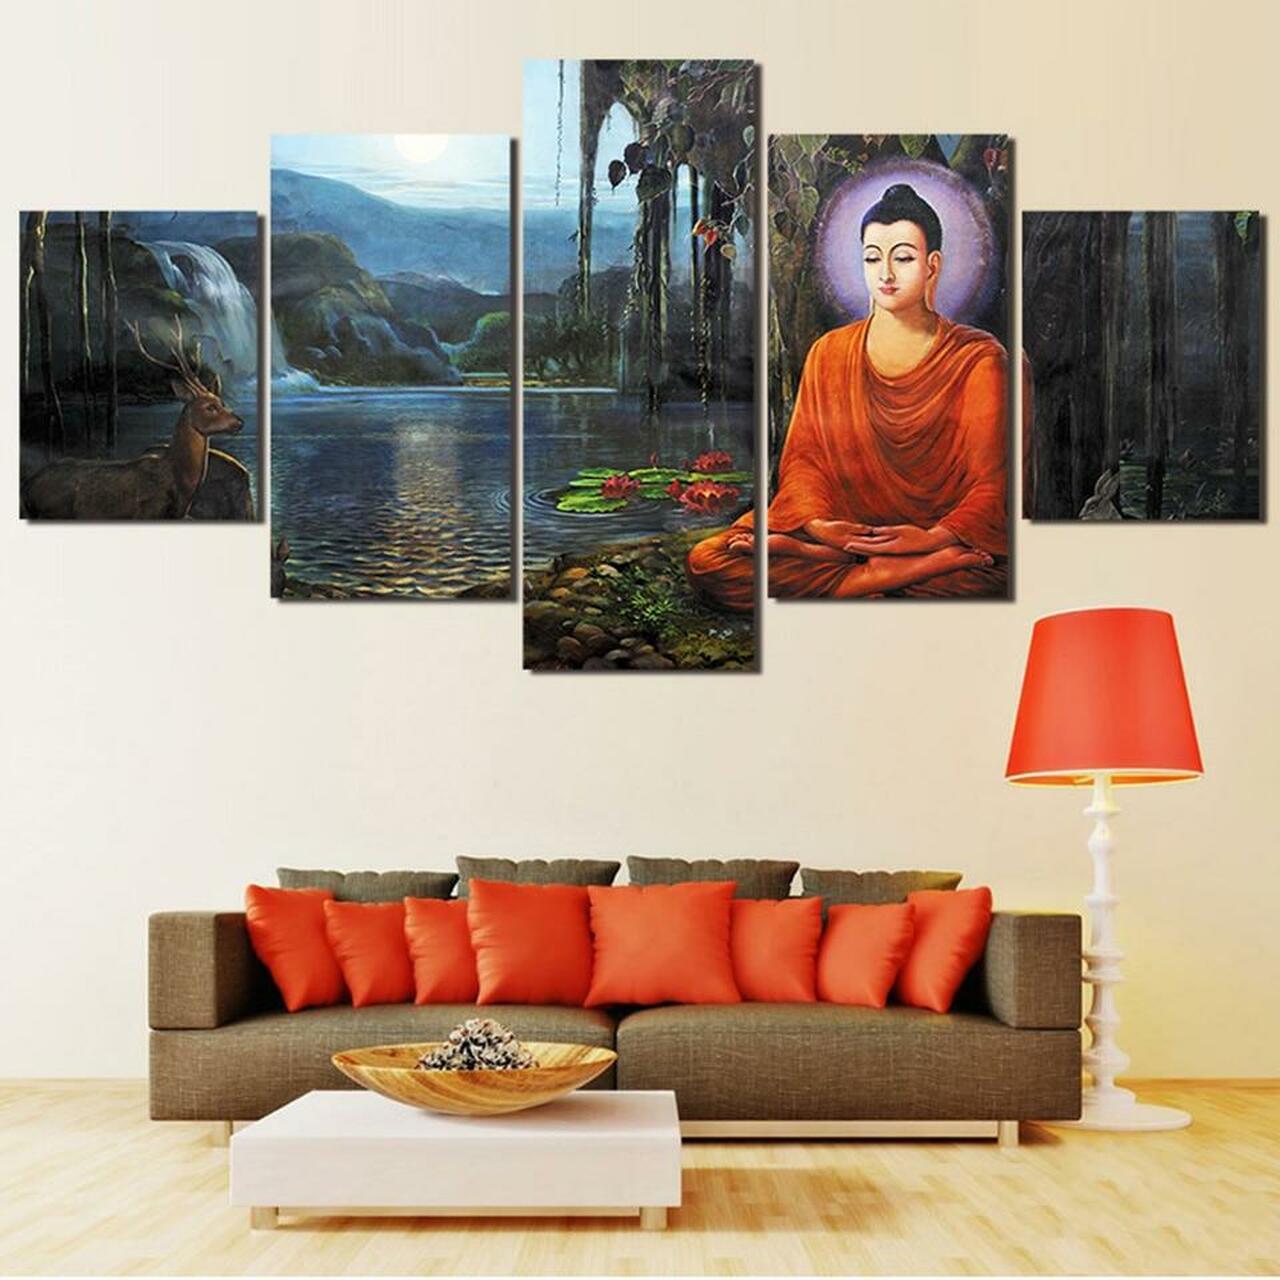 buddha near lake 5 pices peinture sur toile impression sur toile toile art pour la dcoration intrieurekzjkp